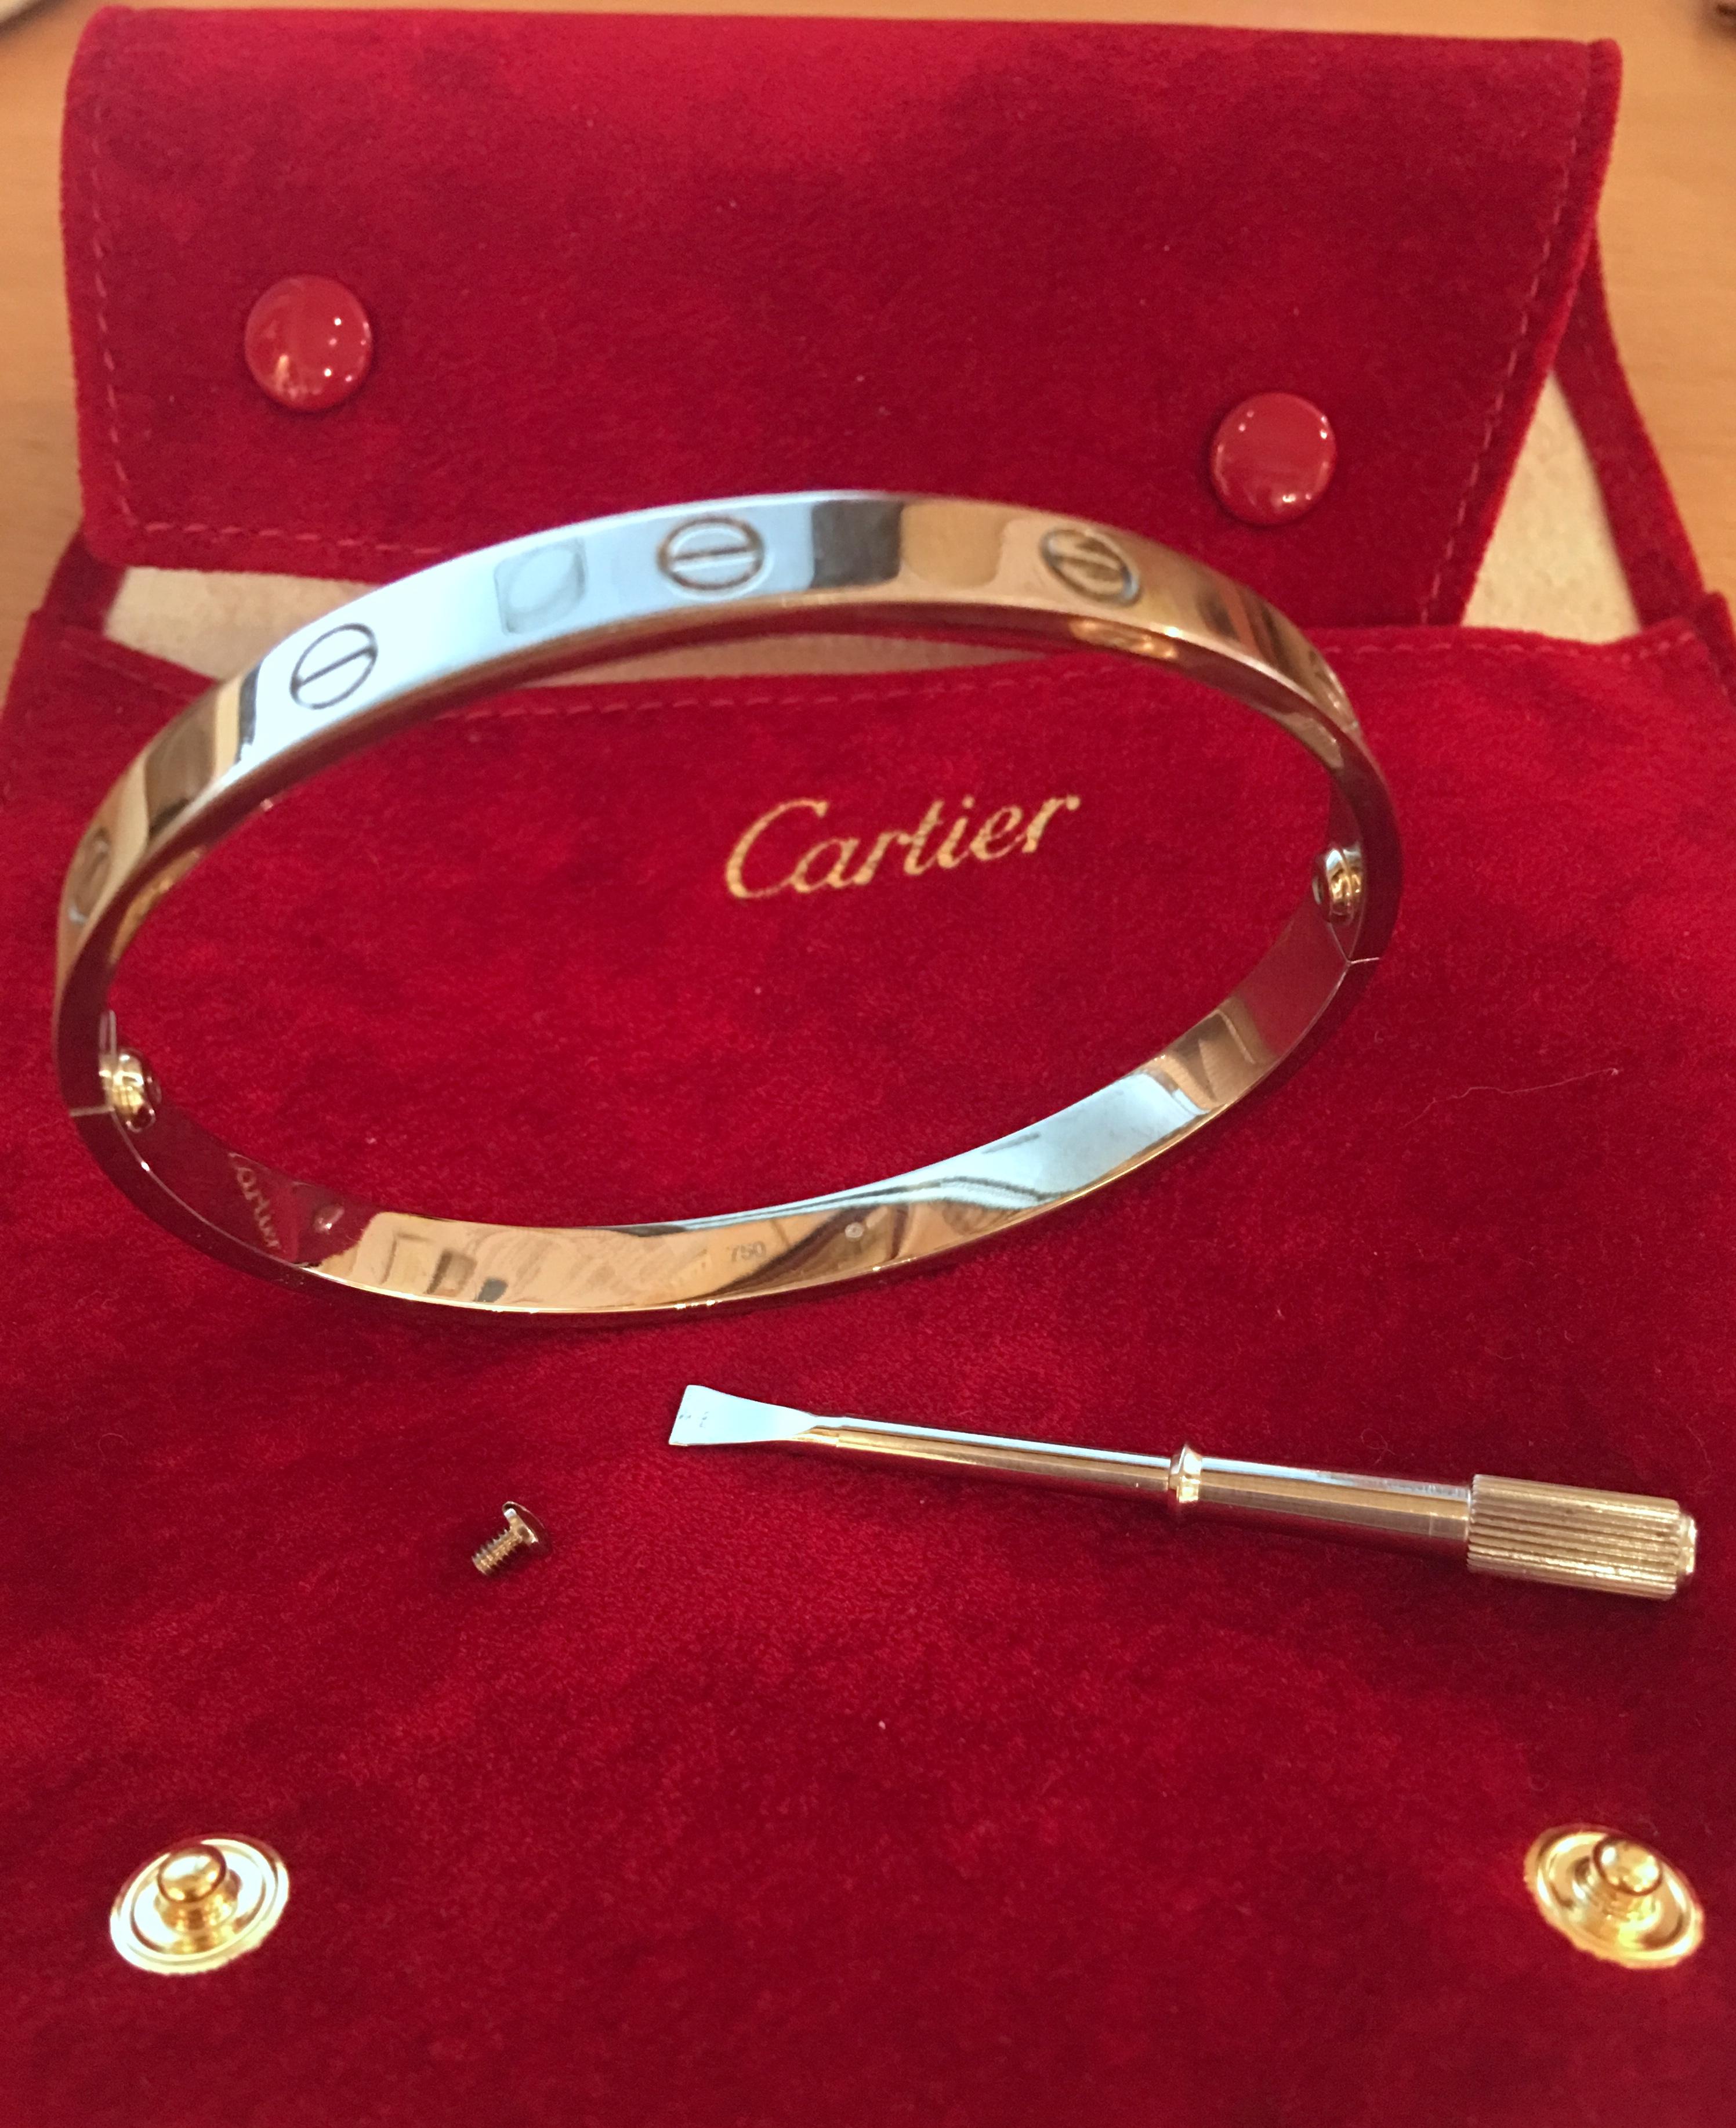 18 carat cartier bracelet